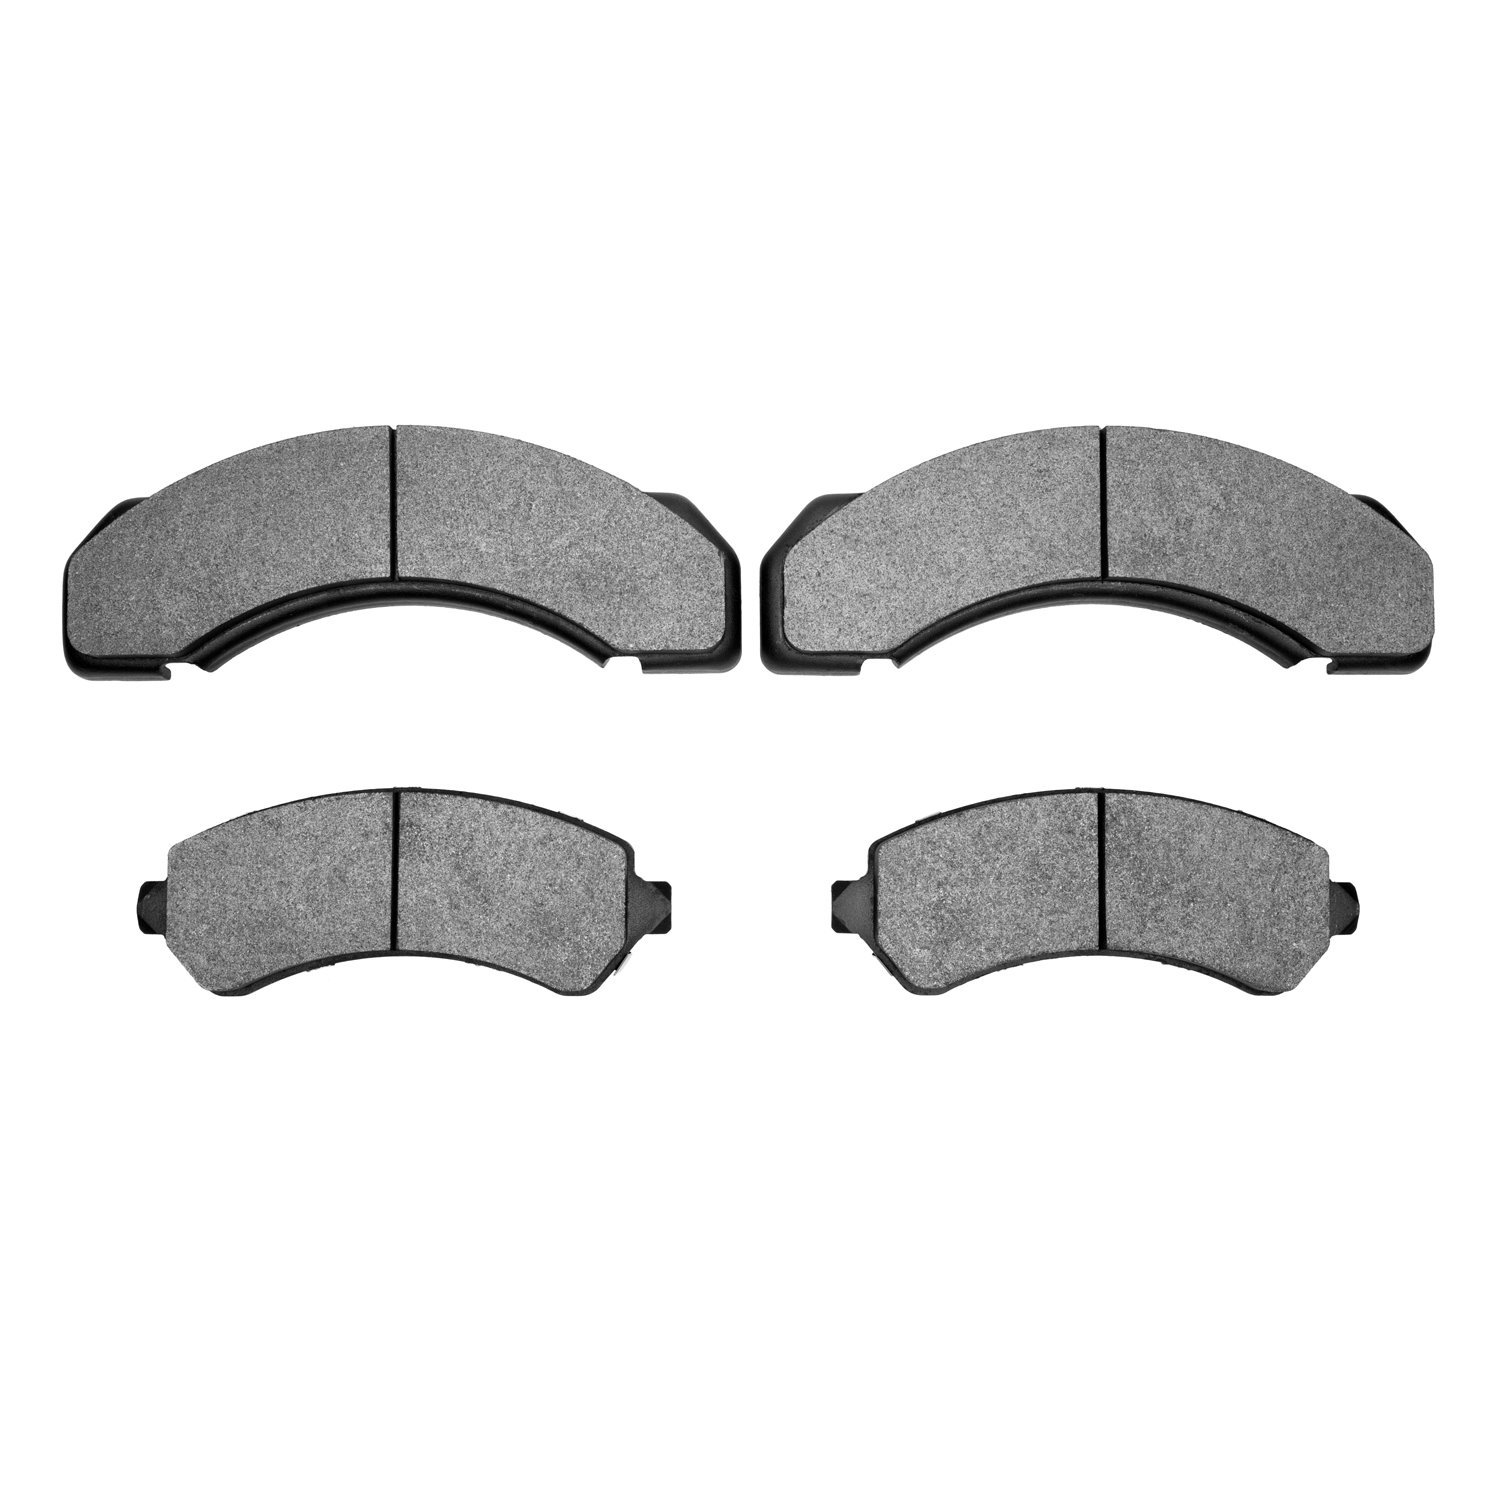 Semi-Metallic Brake Pads, 1973-2012 Fits Multiple Makes/Models, Position: Front & Rear